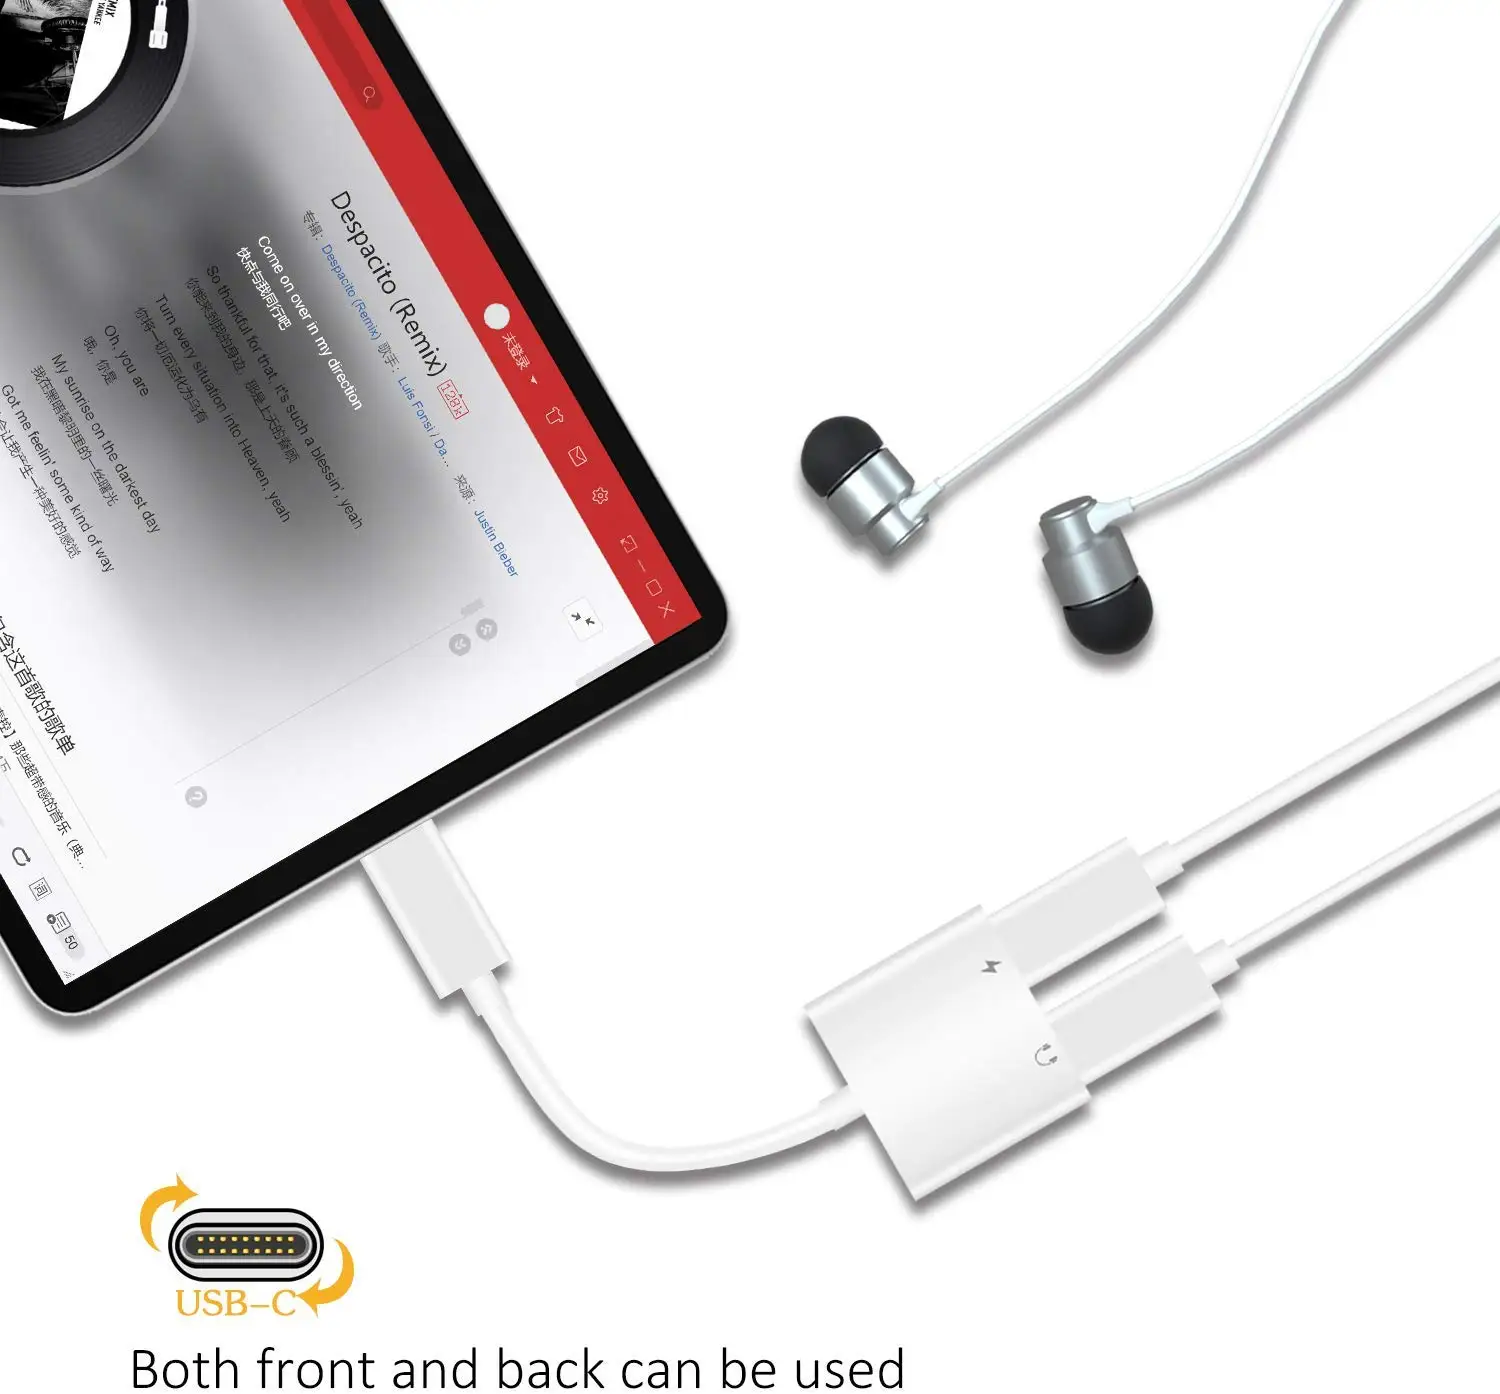 Cherie двойной тип C разъем для зарядки USB C наушники адаптер для samsung Xiaomi huawei Oneplus аудио сплиттер наушники Auriculares